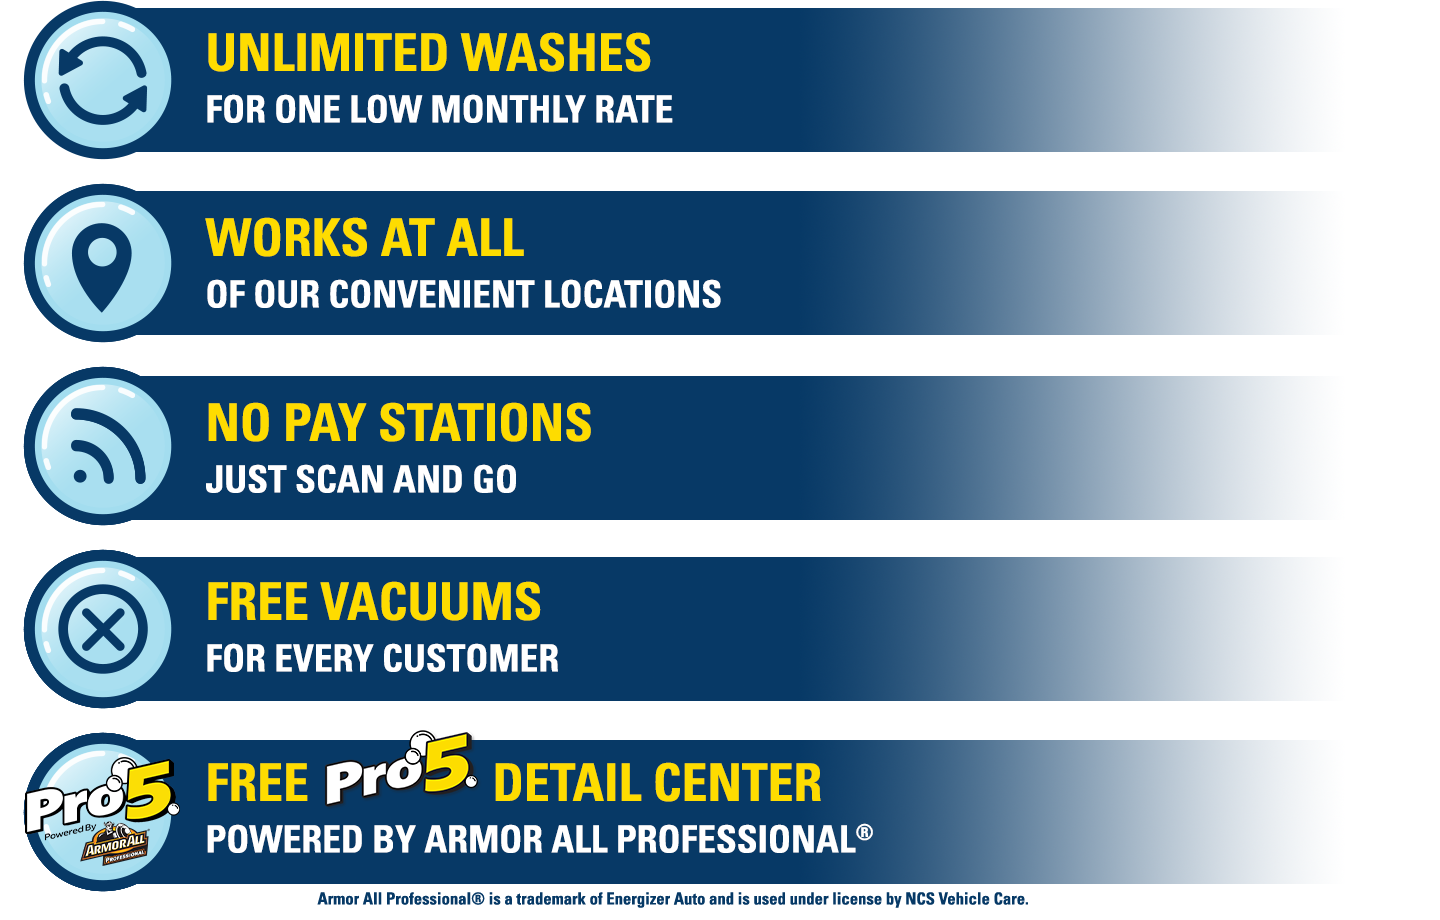 Take 5 Car Wash Unlimited Wash Benefits